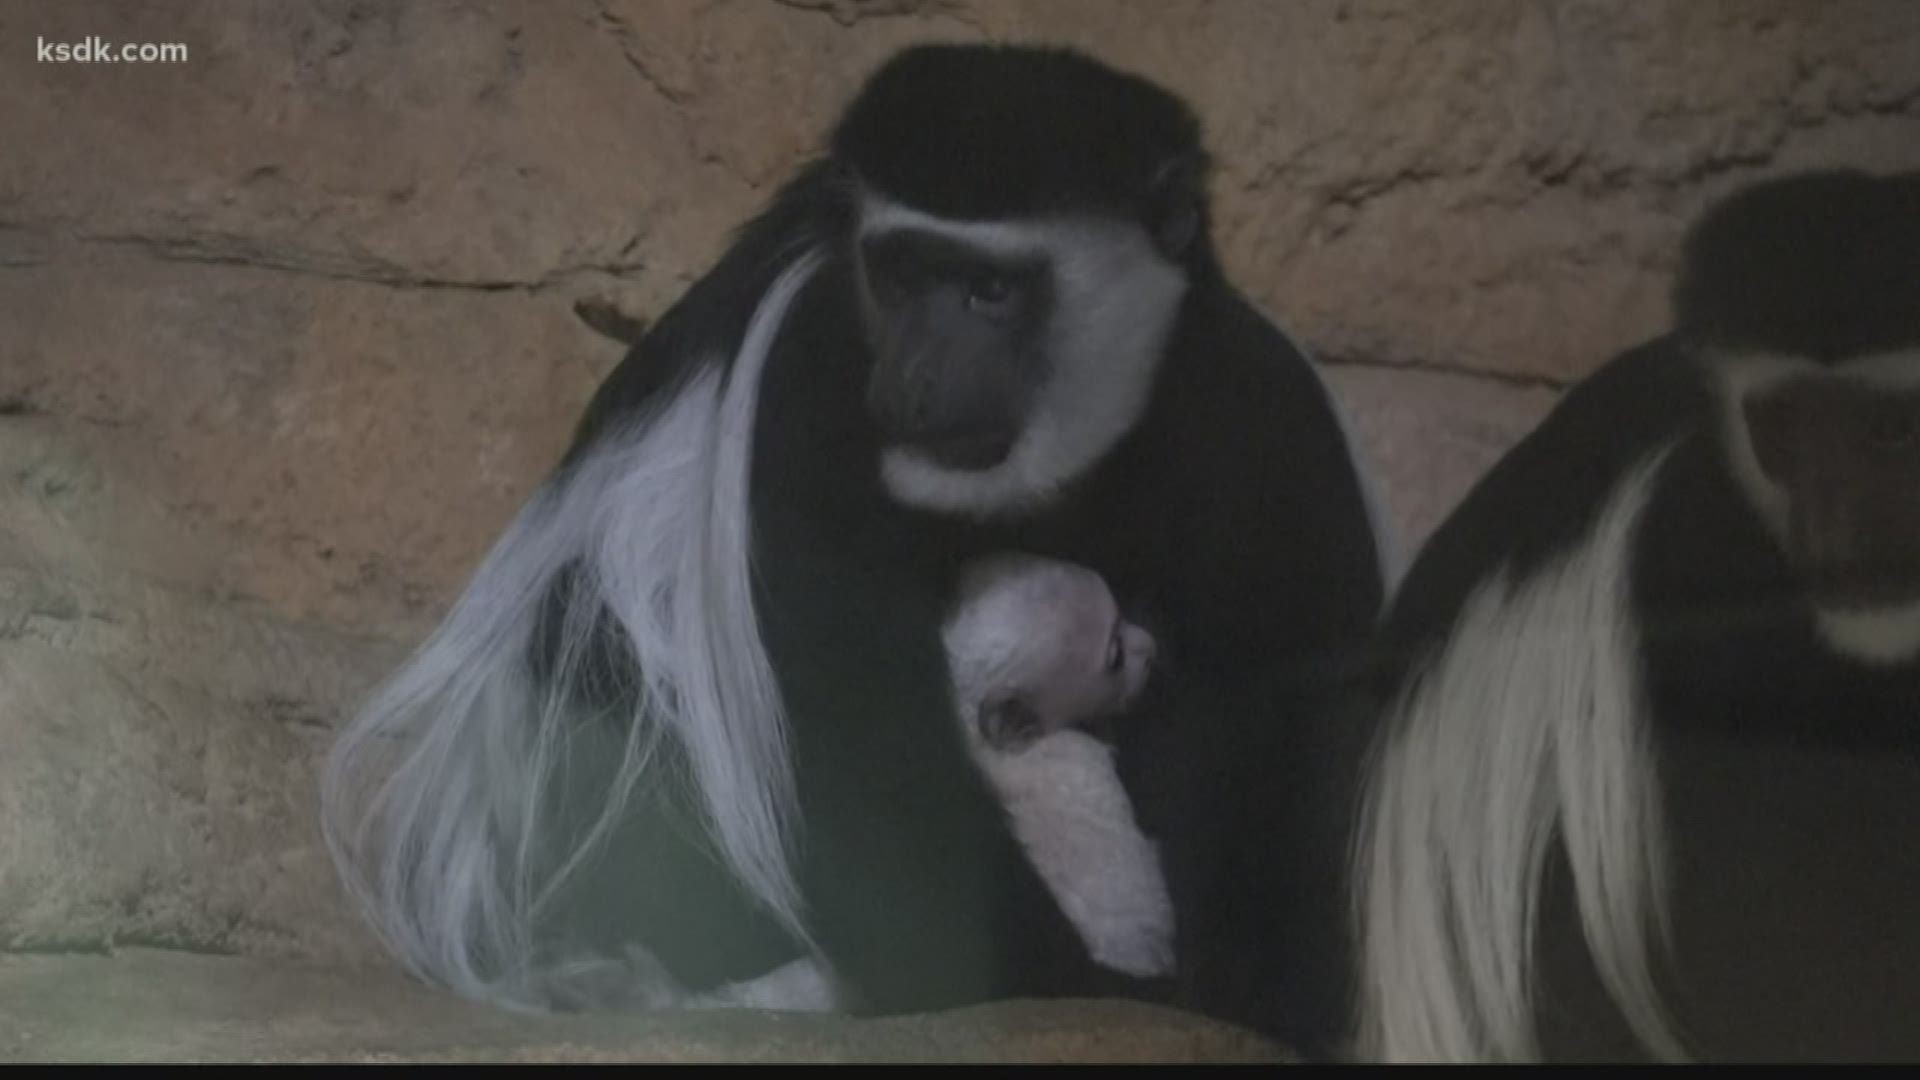 Stl news | Baby colobus monkey born at Saint Louis Zoo | 0